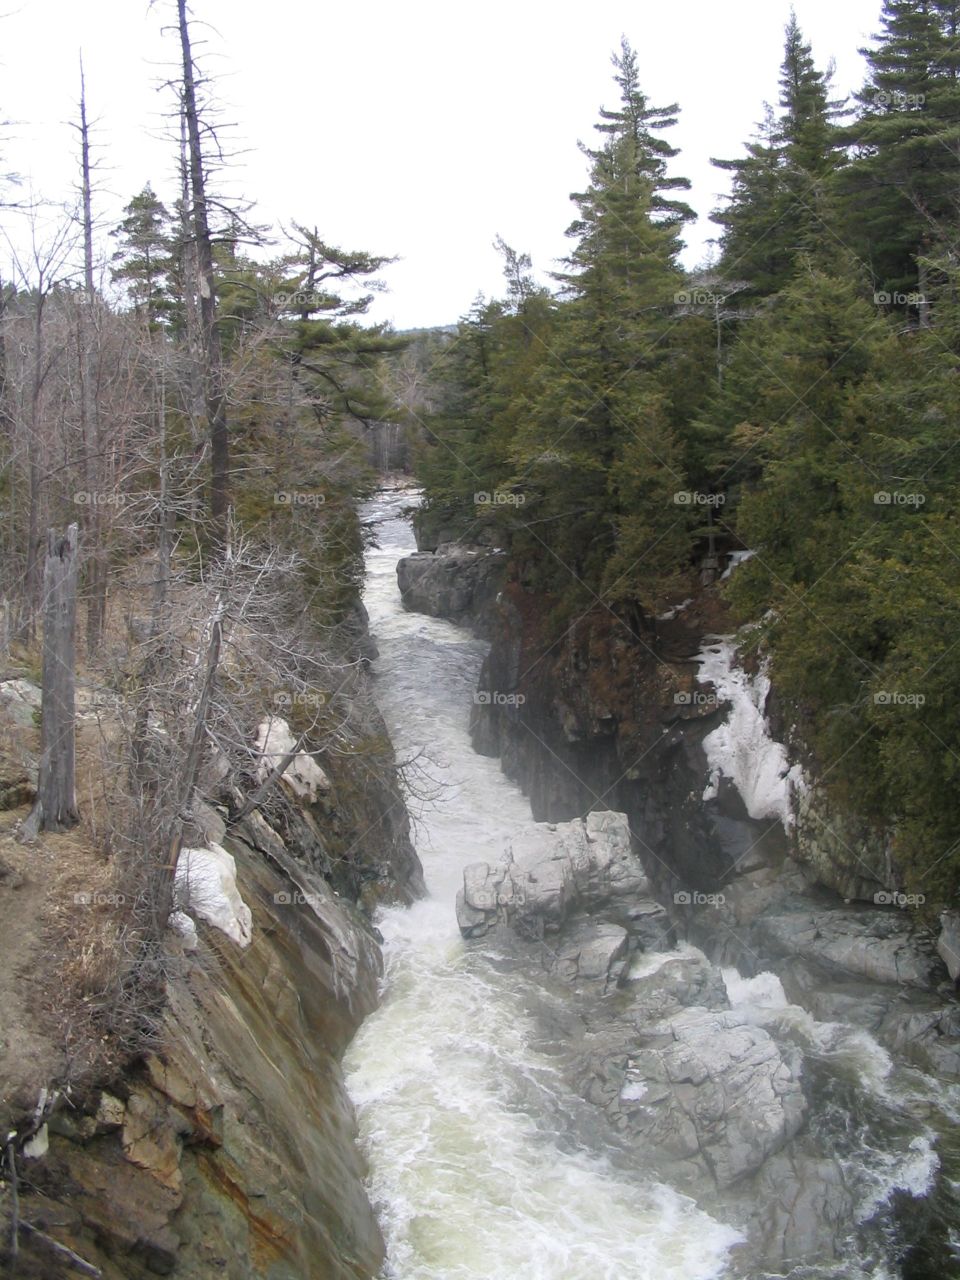 River rapids through a forest rock cut near Lake Placid, New York